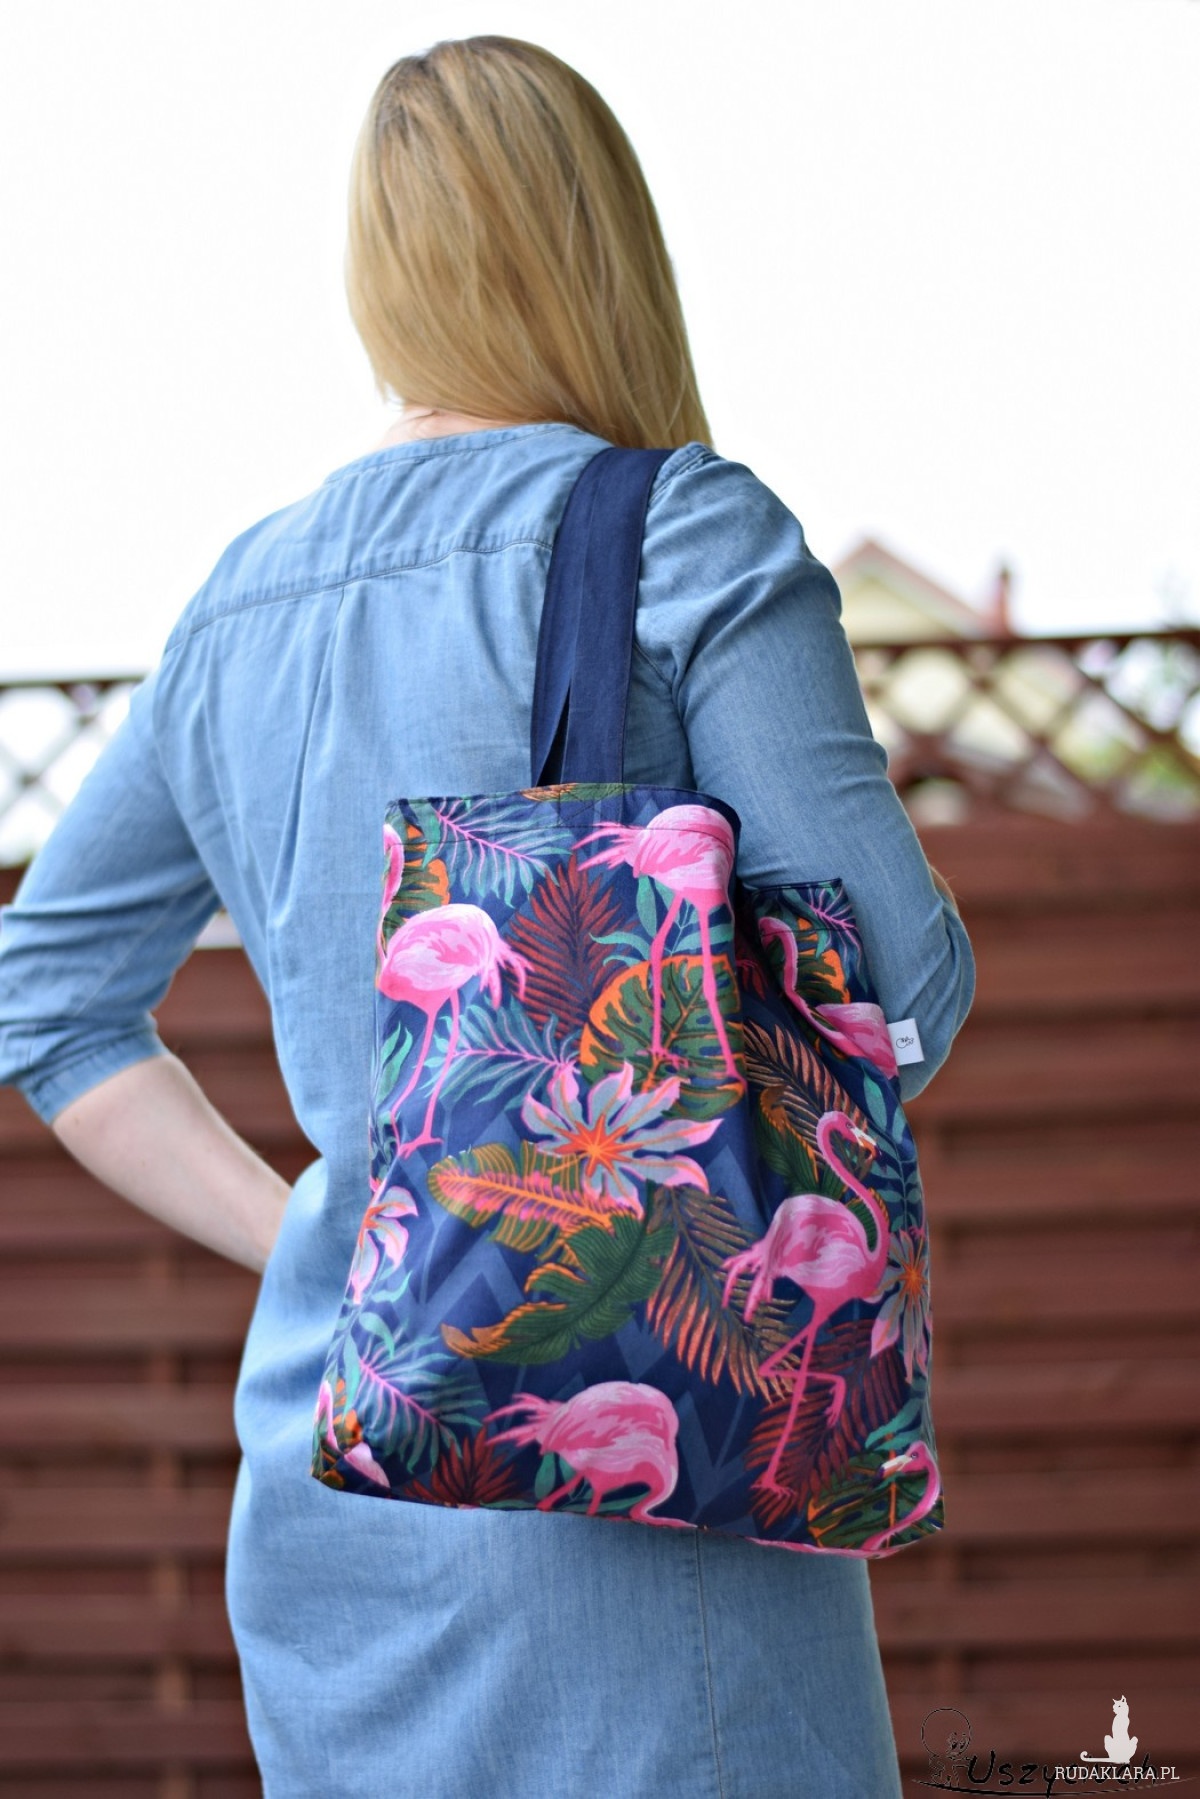 Torba na zakupy Shopperka eko torba, siatka na zakupy, torba zakupowa szoperka flamingi